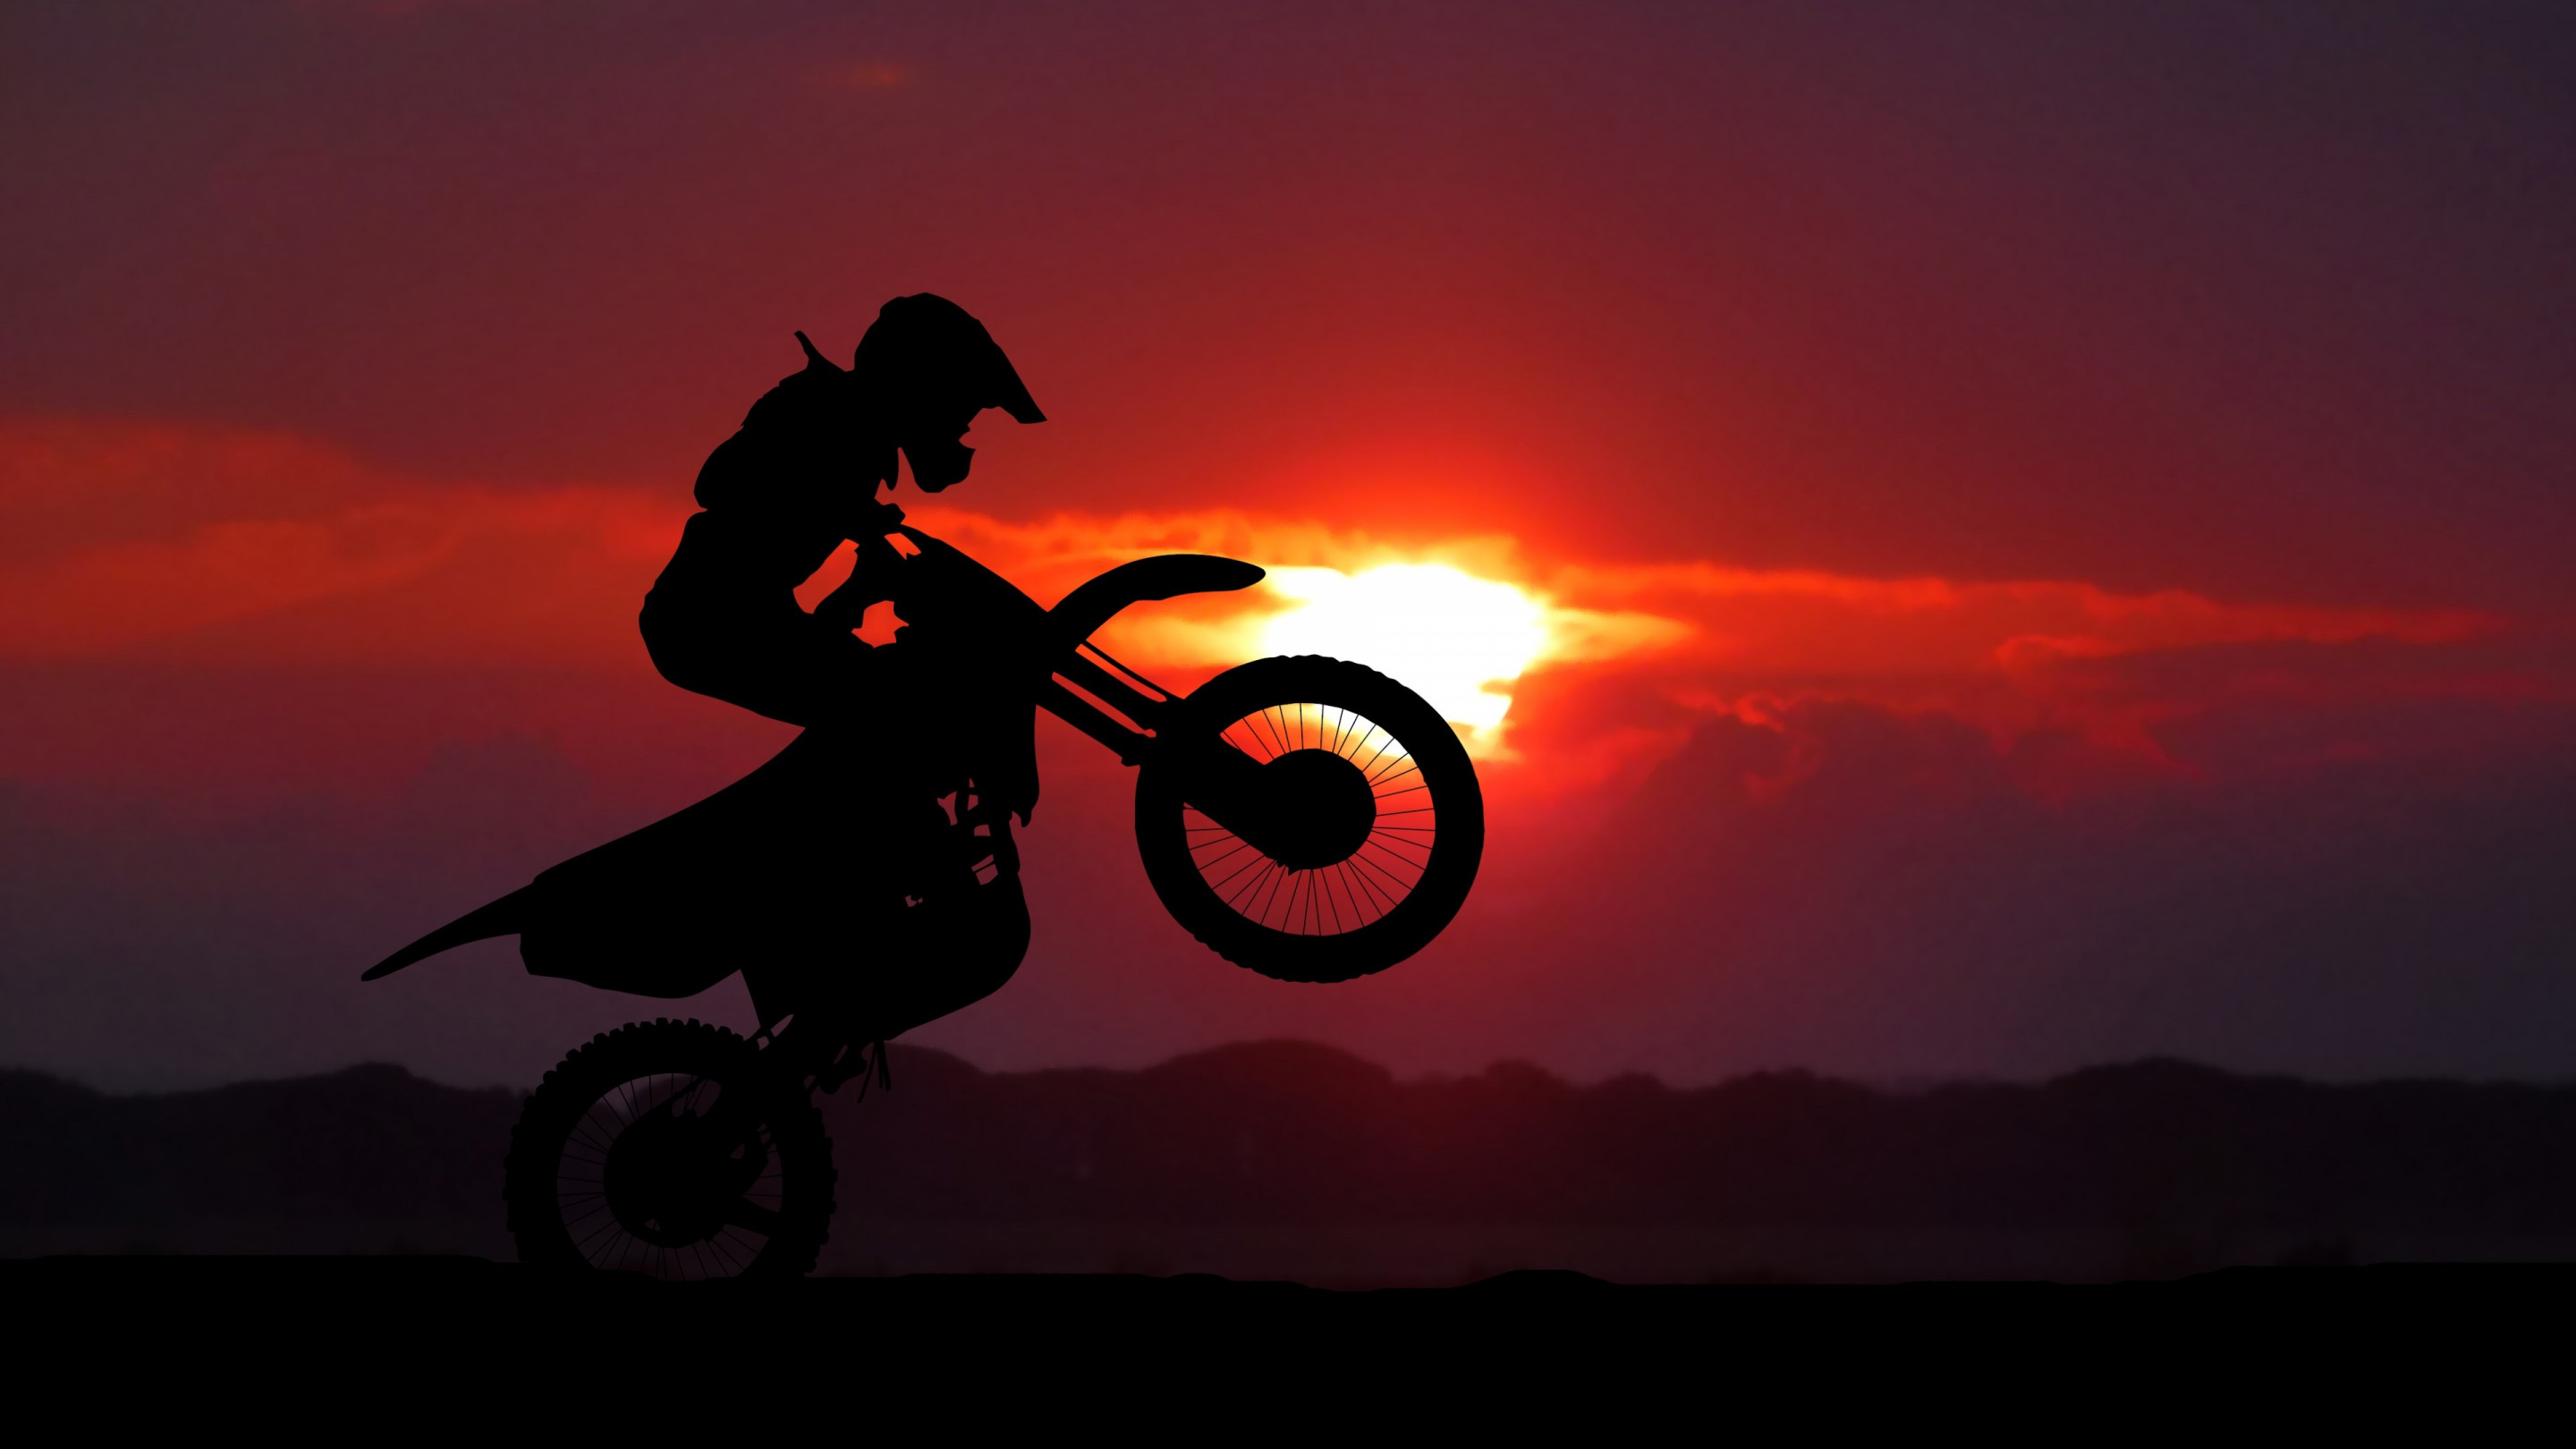 Biker on motorcycle at sunrise wallpaper 2880x1620